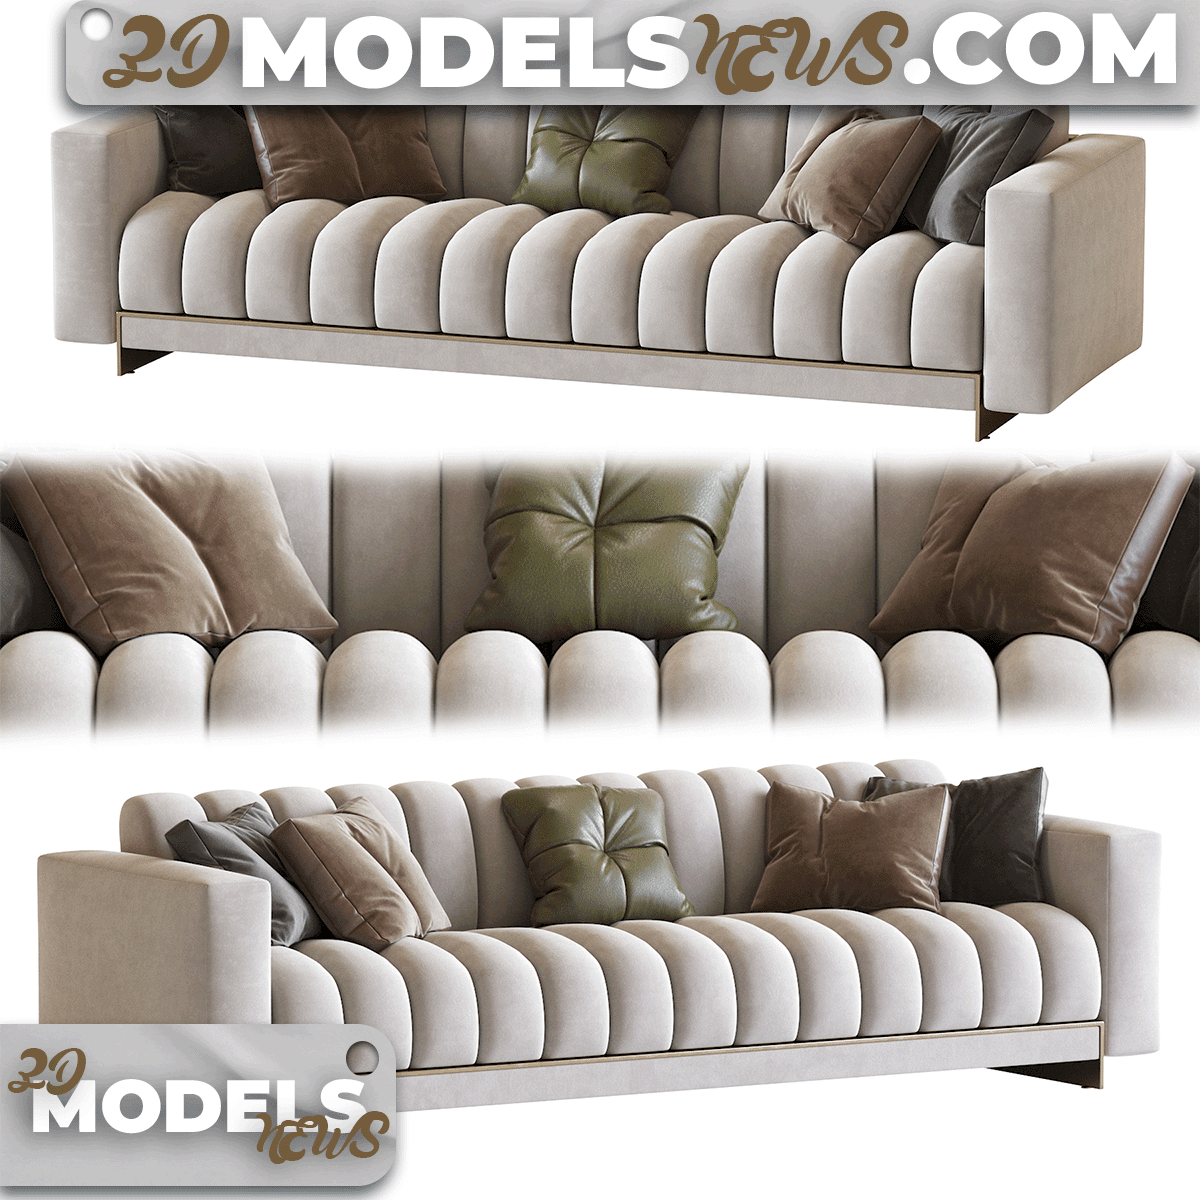 The Well Balanced Sofa Model 1